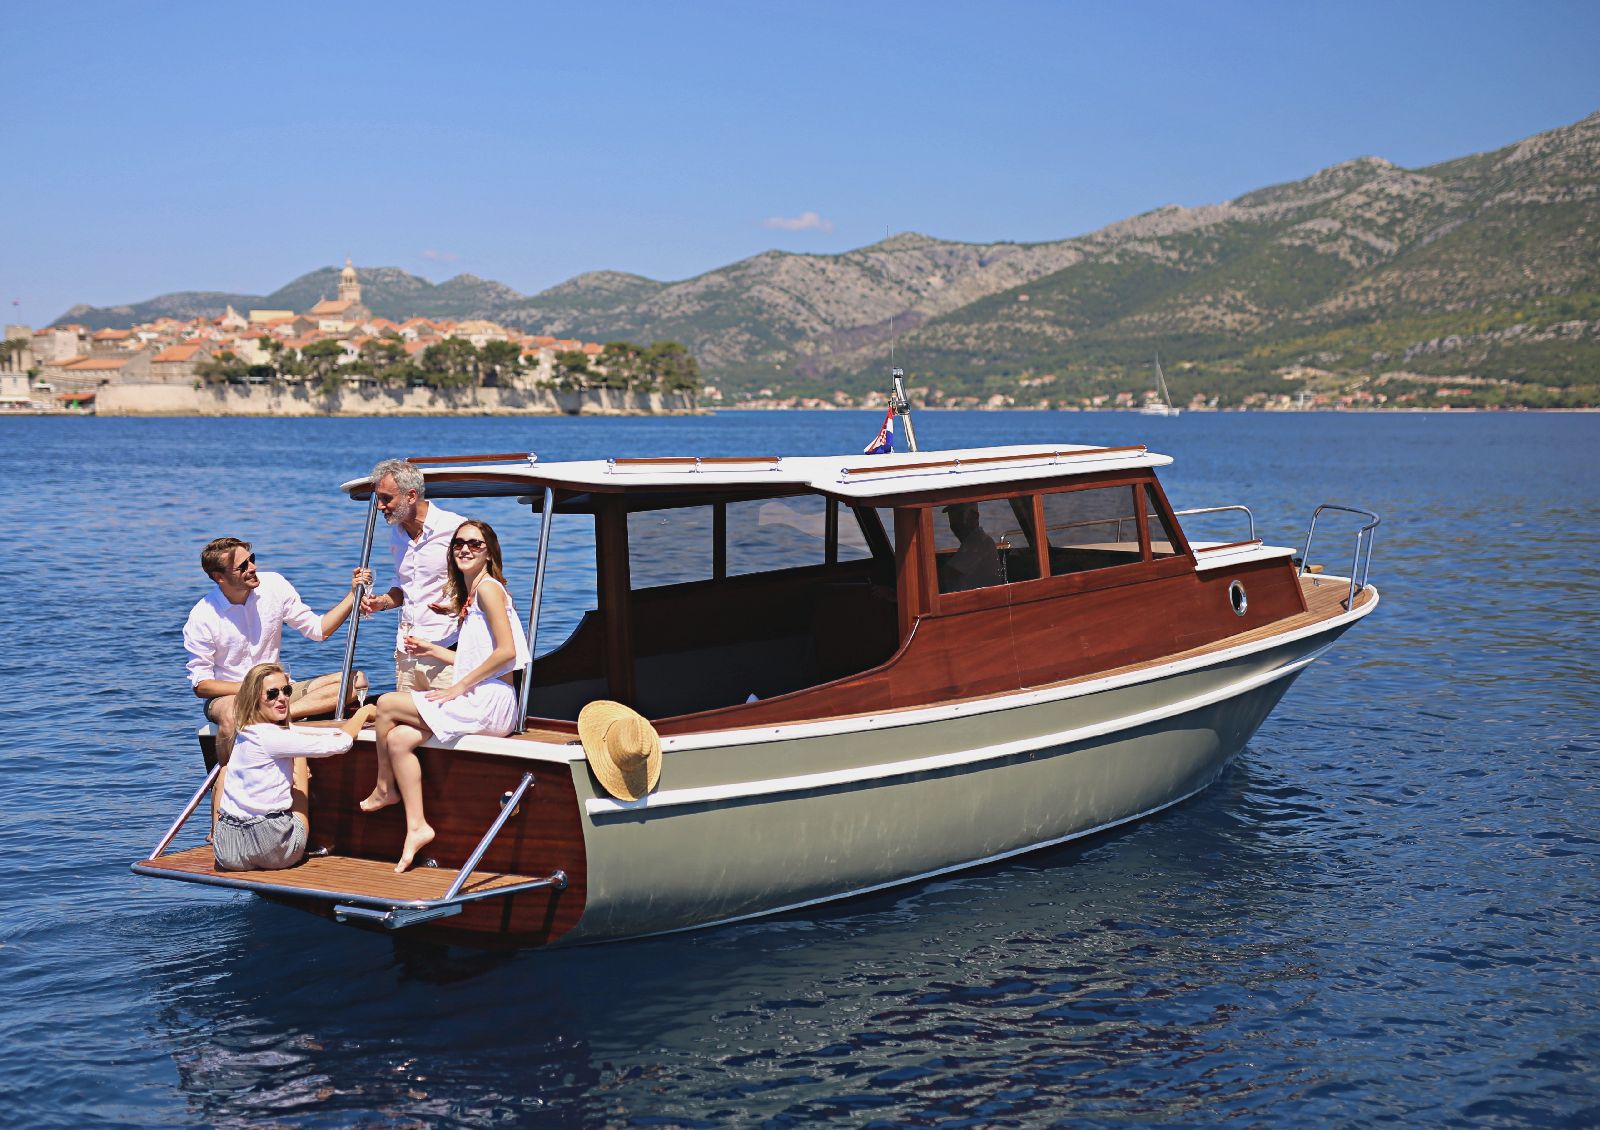 Boat trip from the Lesic Dimitri Palace Korcula Croatia